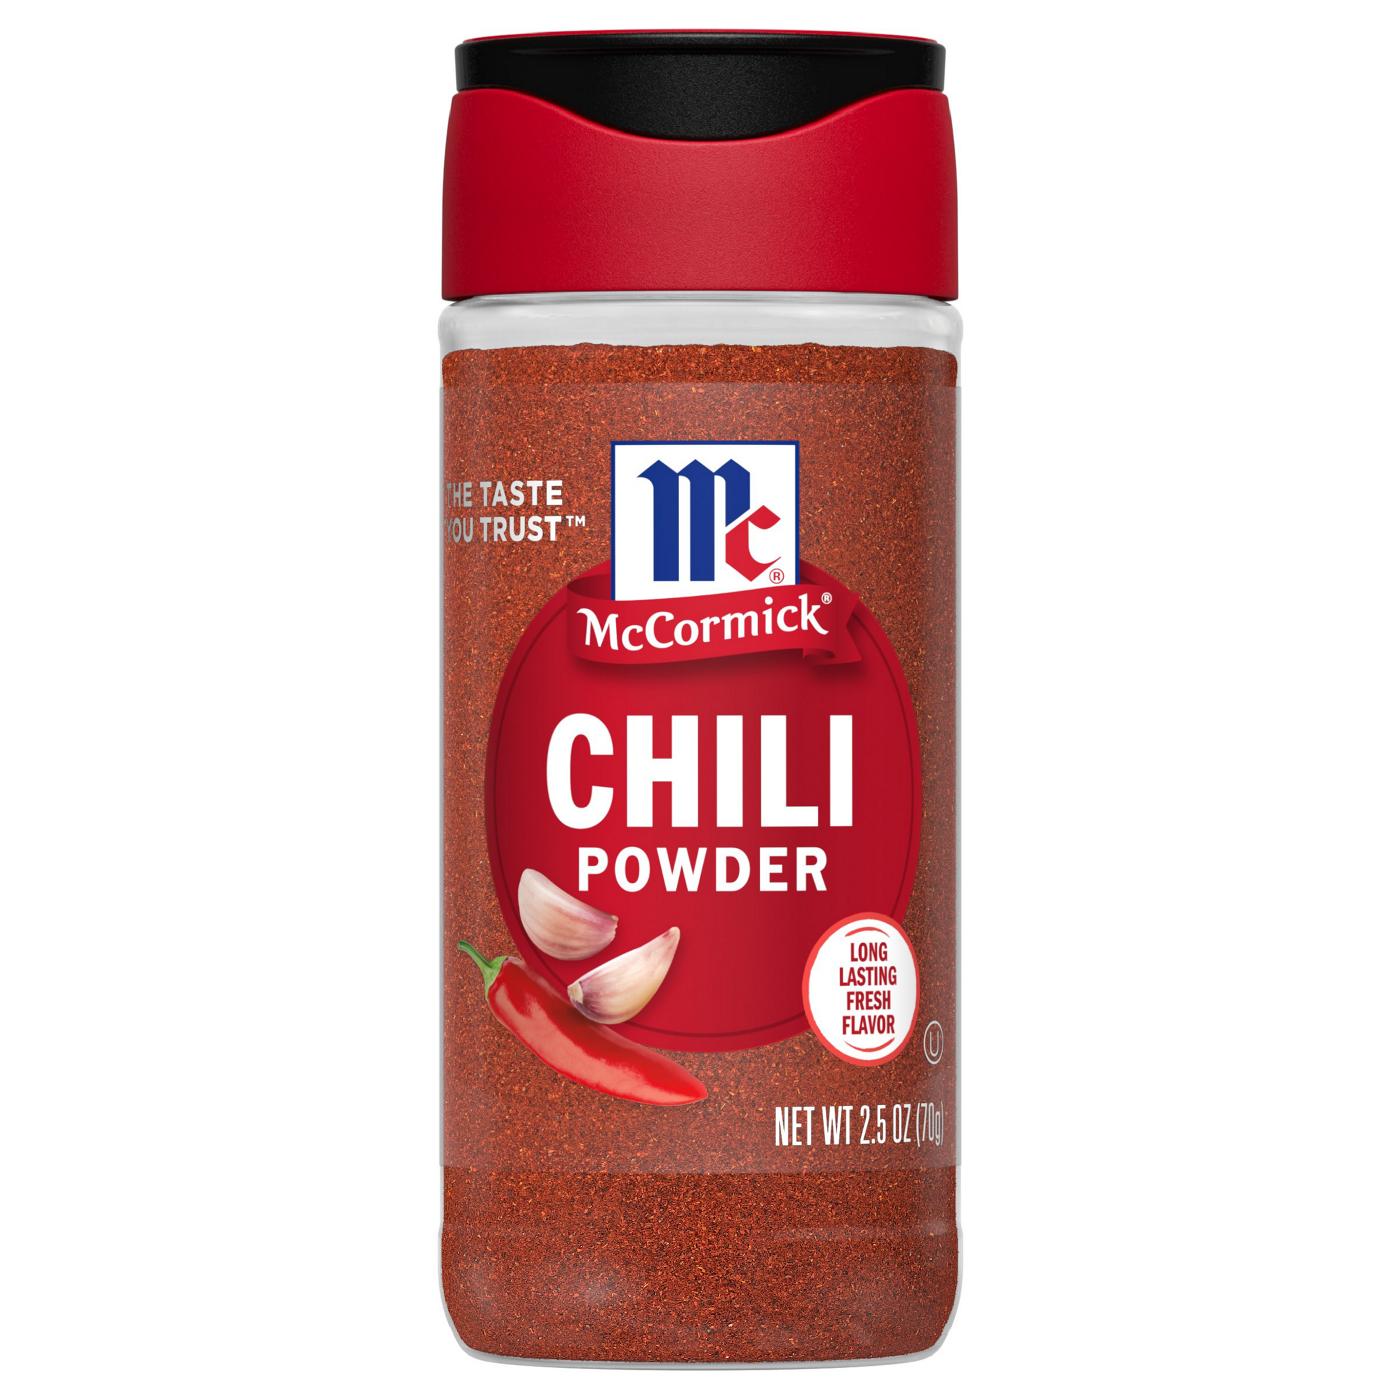 McCormick Chili Powder; image 1 of 7